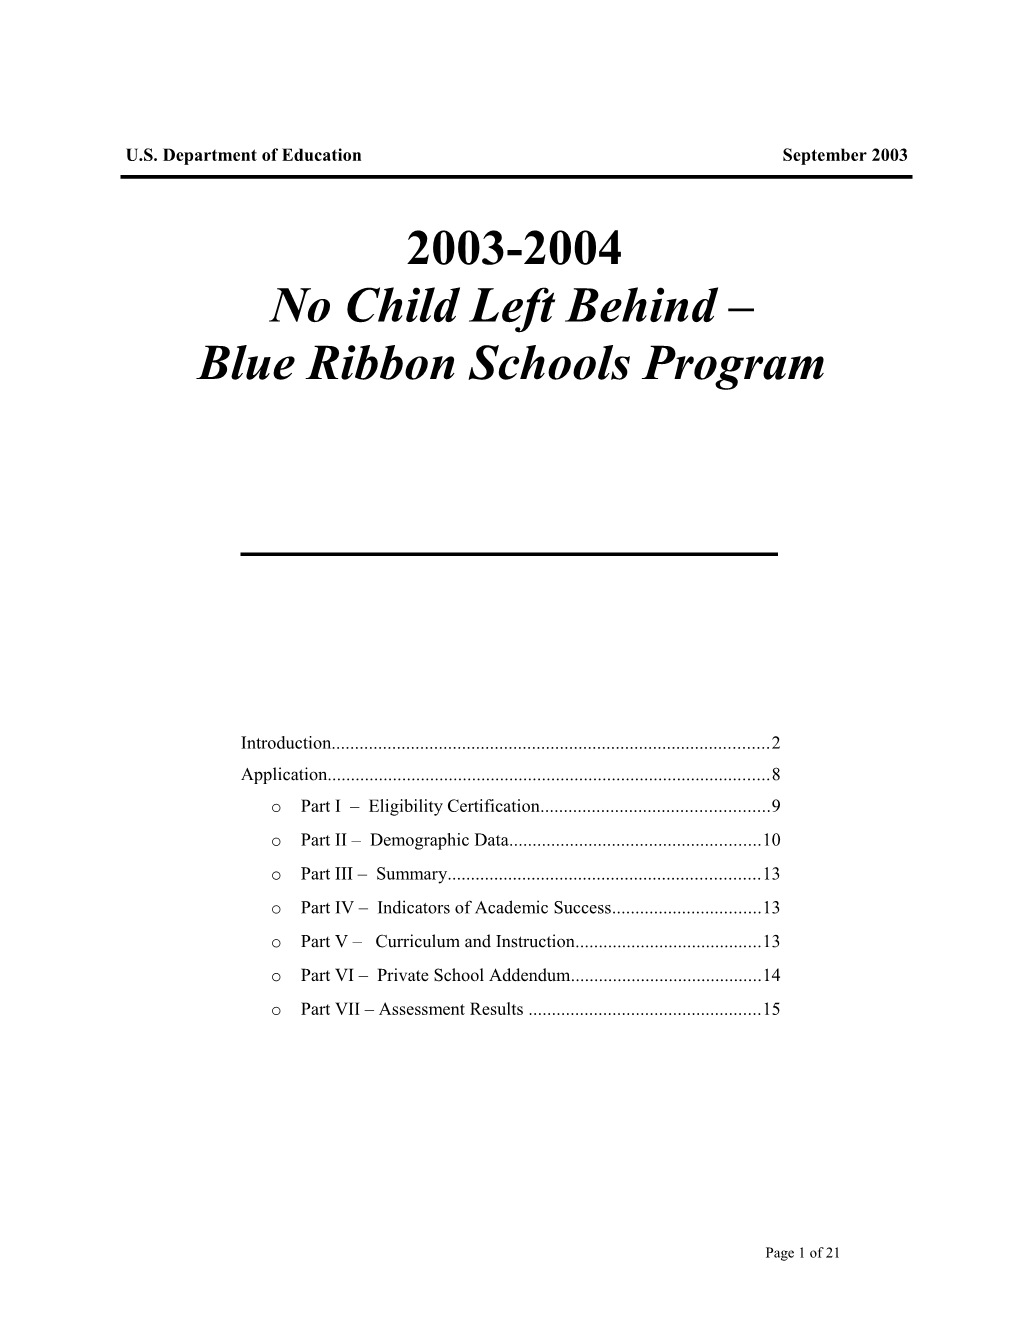 Application 2003-2004, No Child Left Behind-Blue Ribbon Schools Program (Msword)